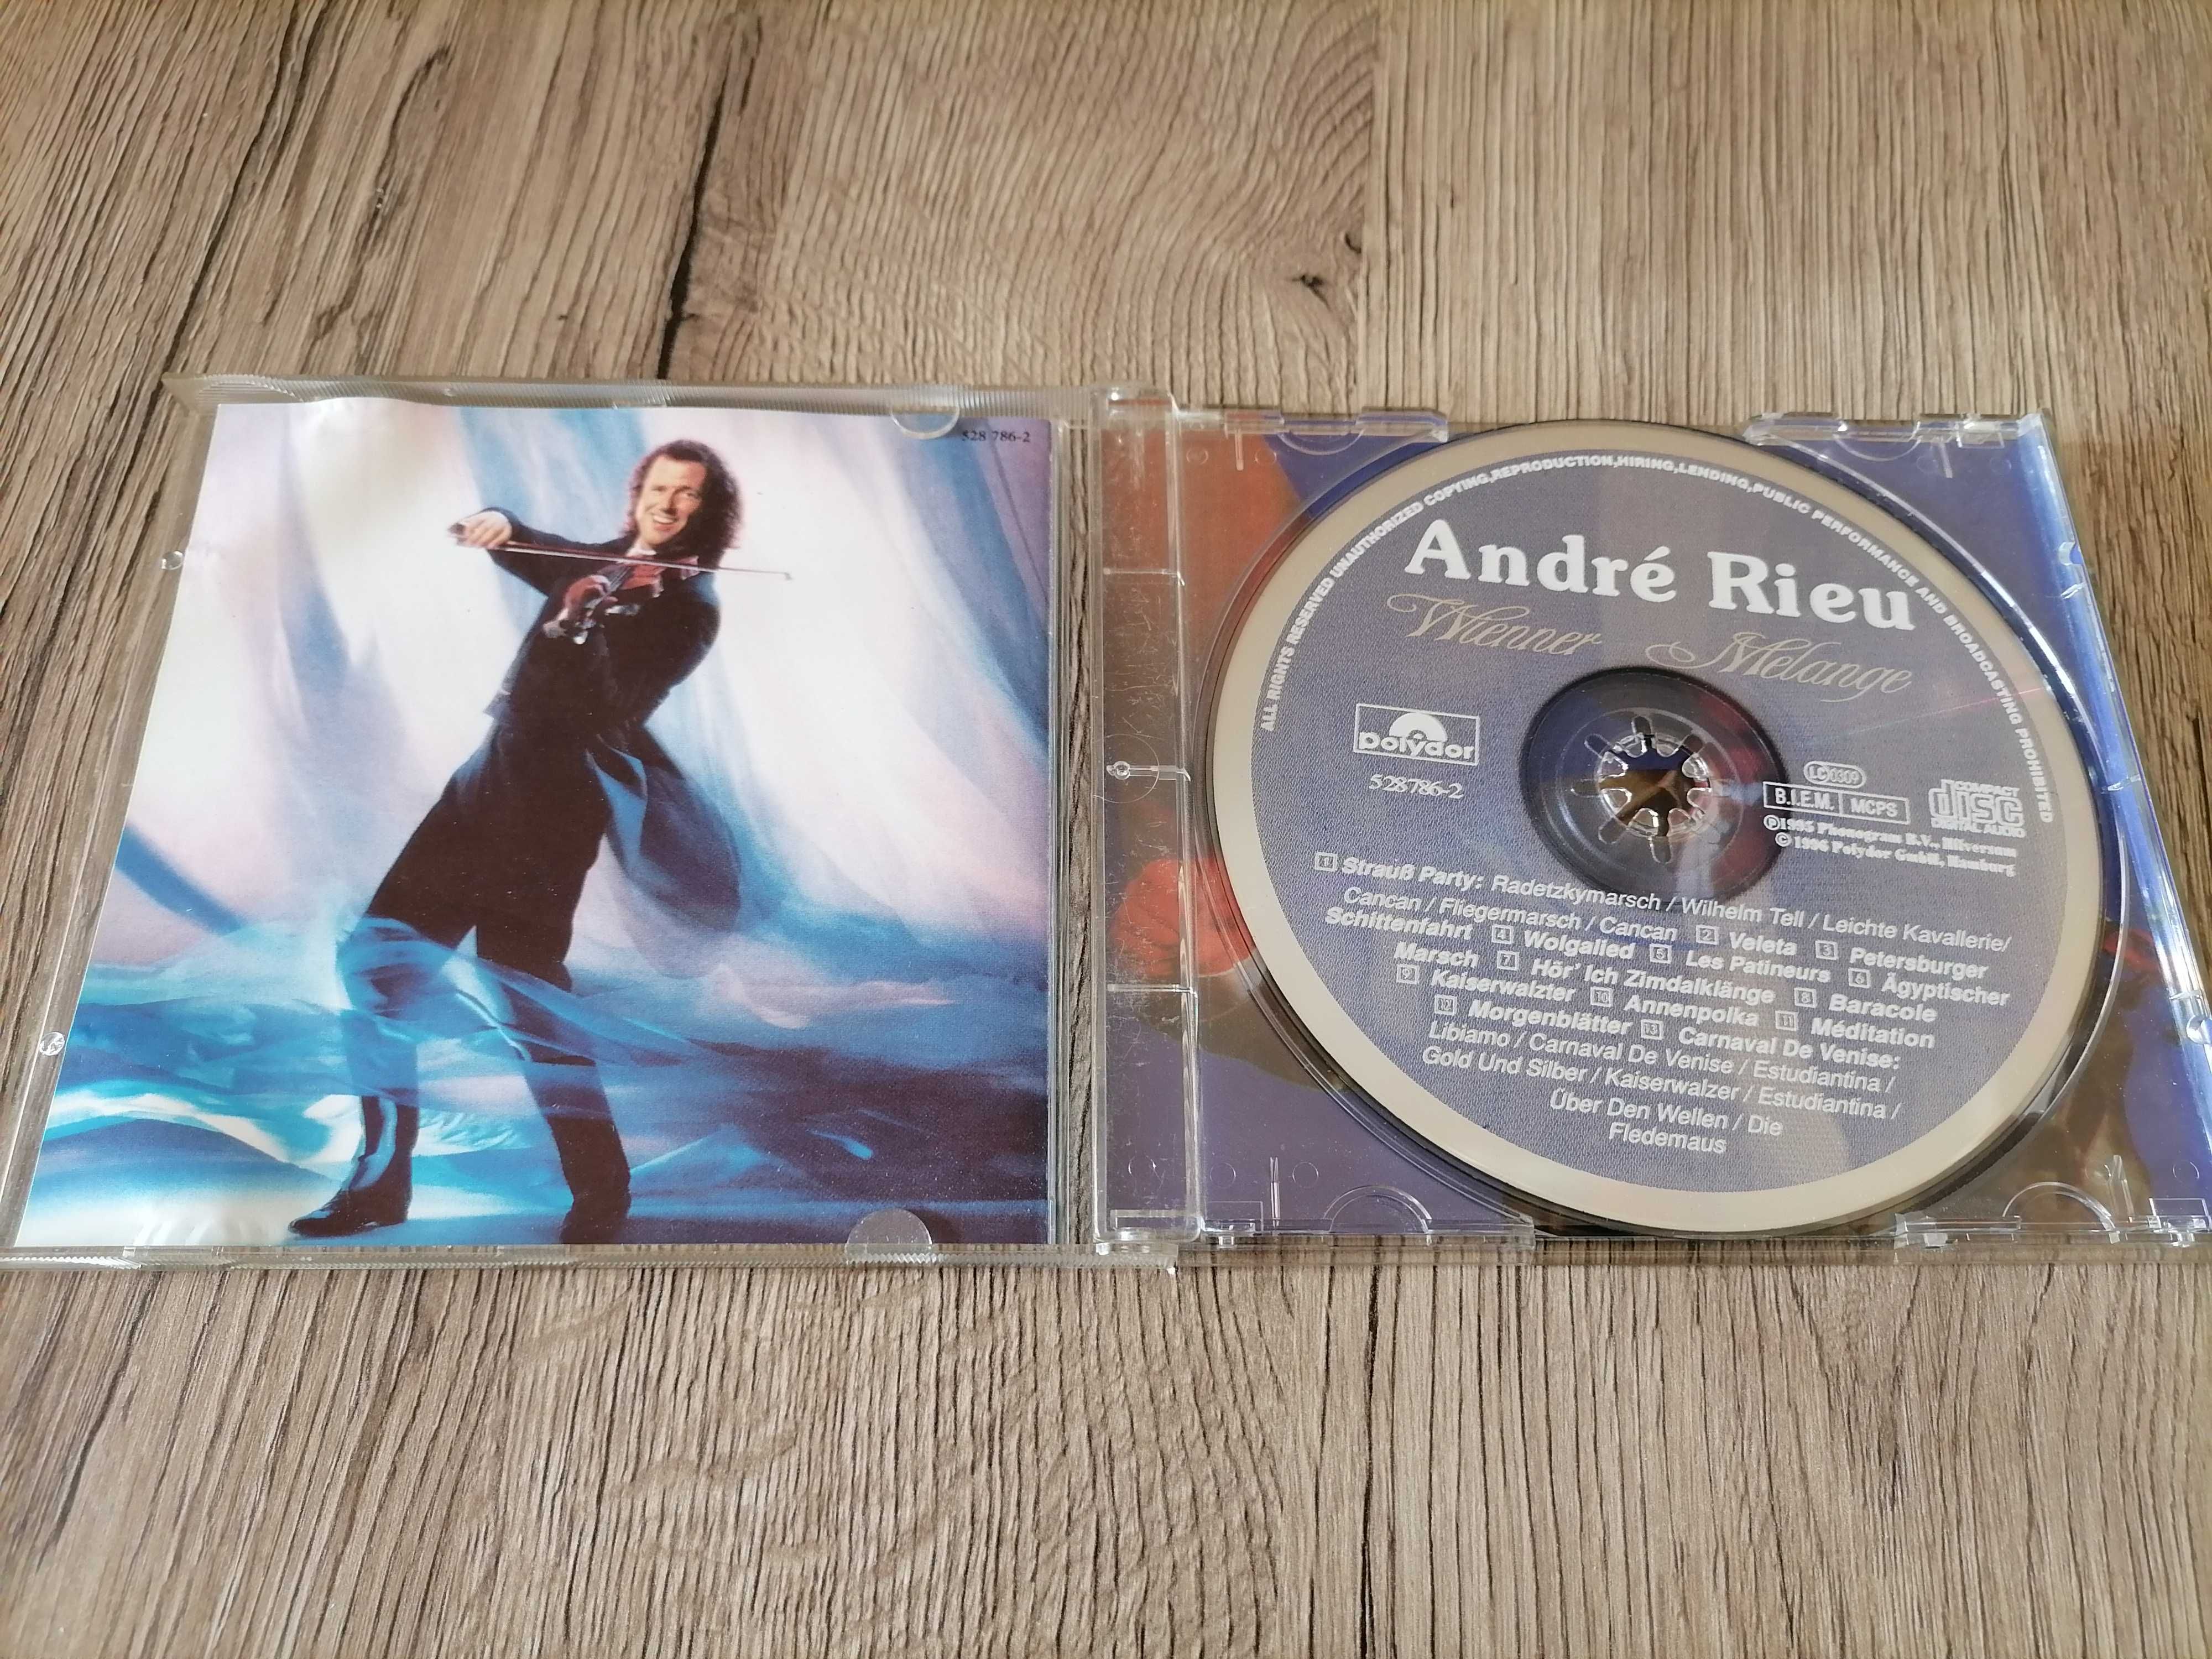 André Rieu – Wiener Melange CD